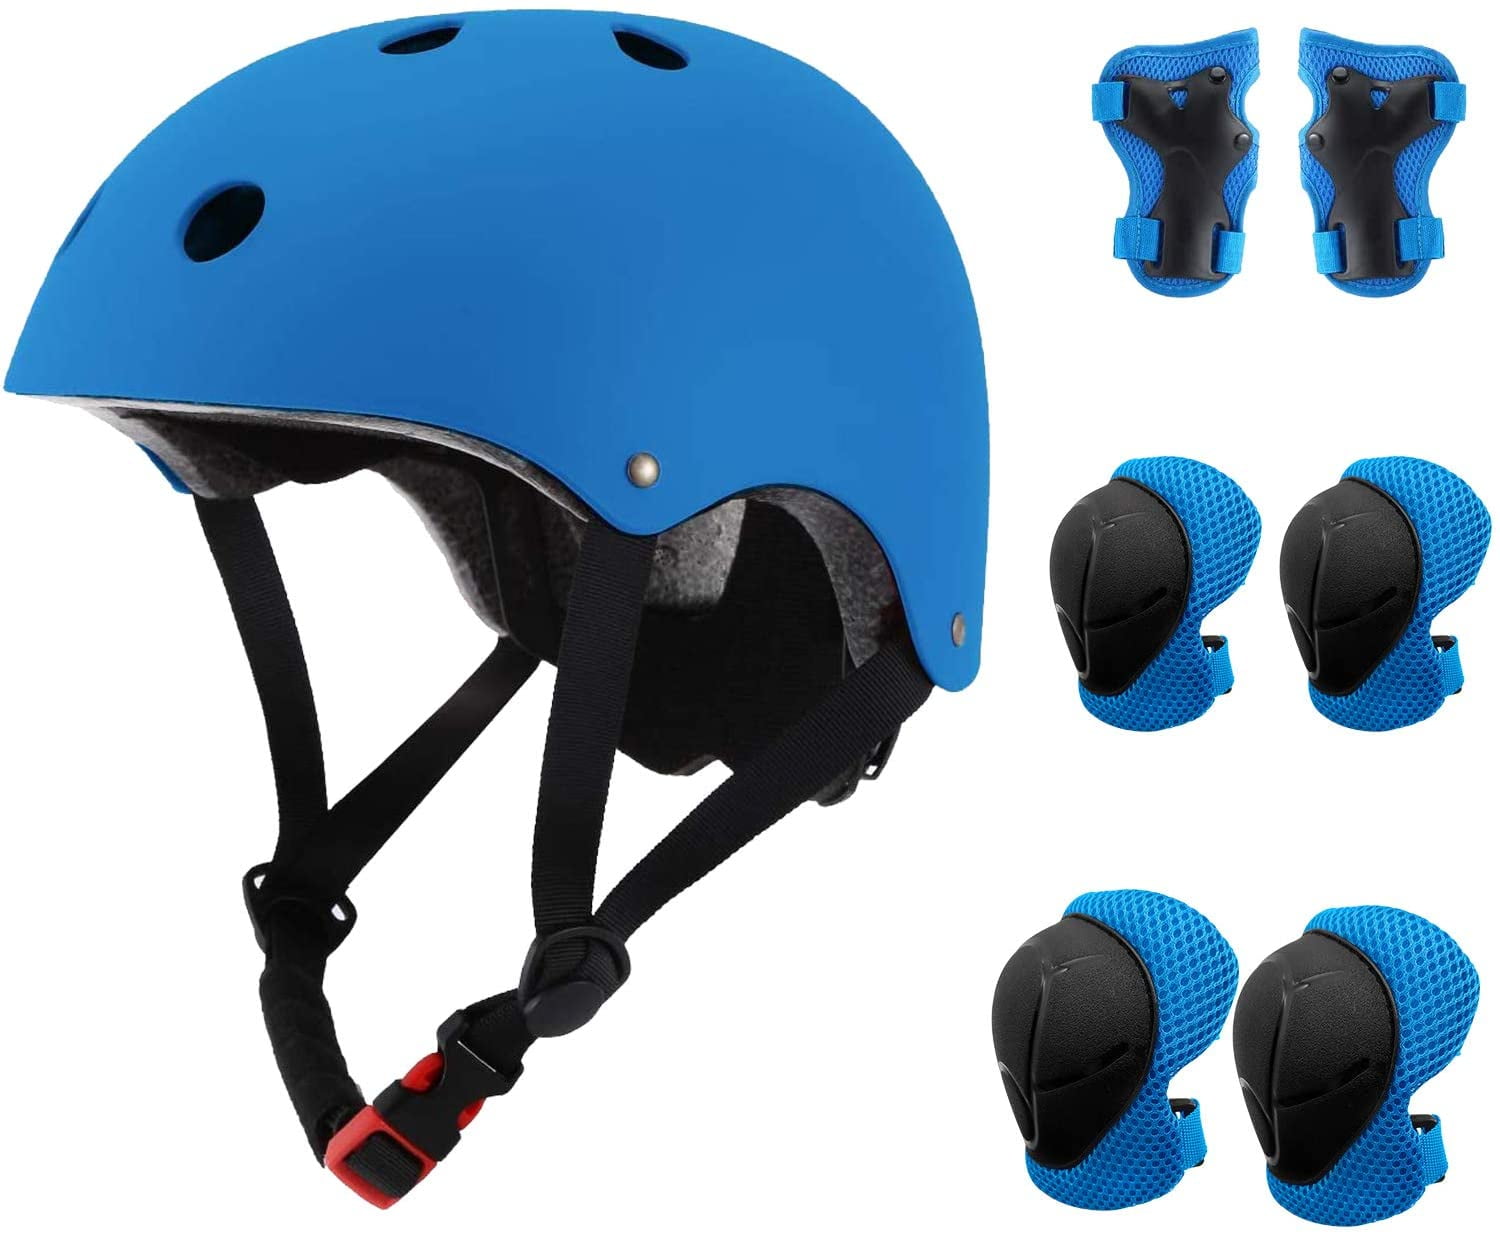 Kids Helmet With Safety Pads Set Bike Adjustable For Toddler Boys Girls Youth 